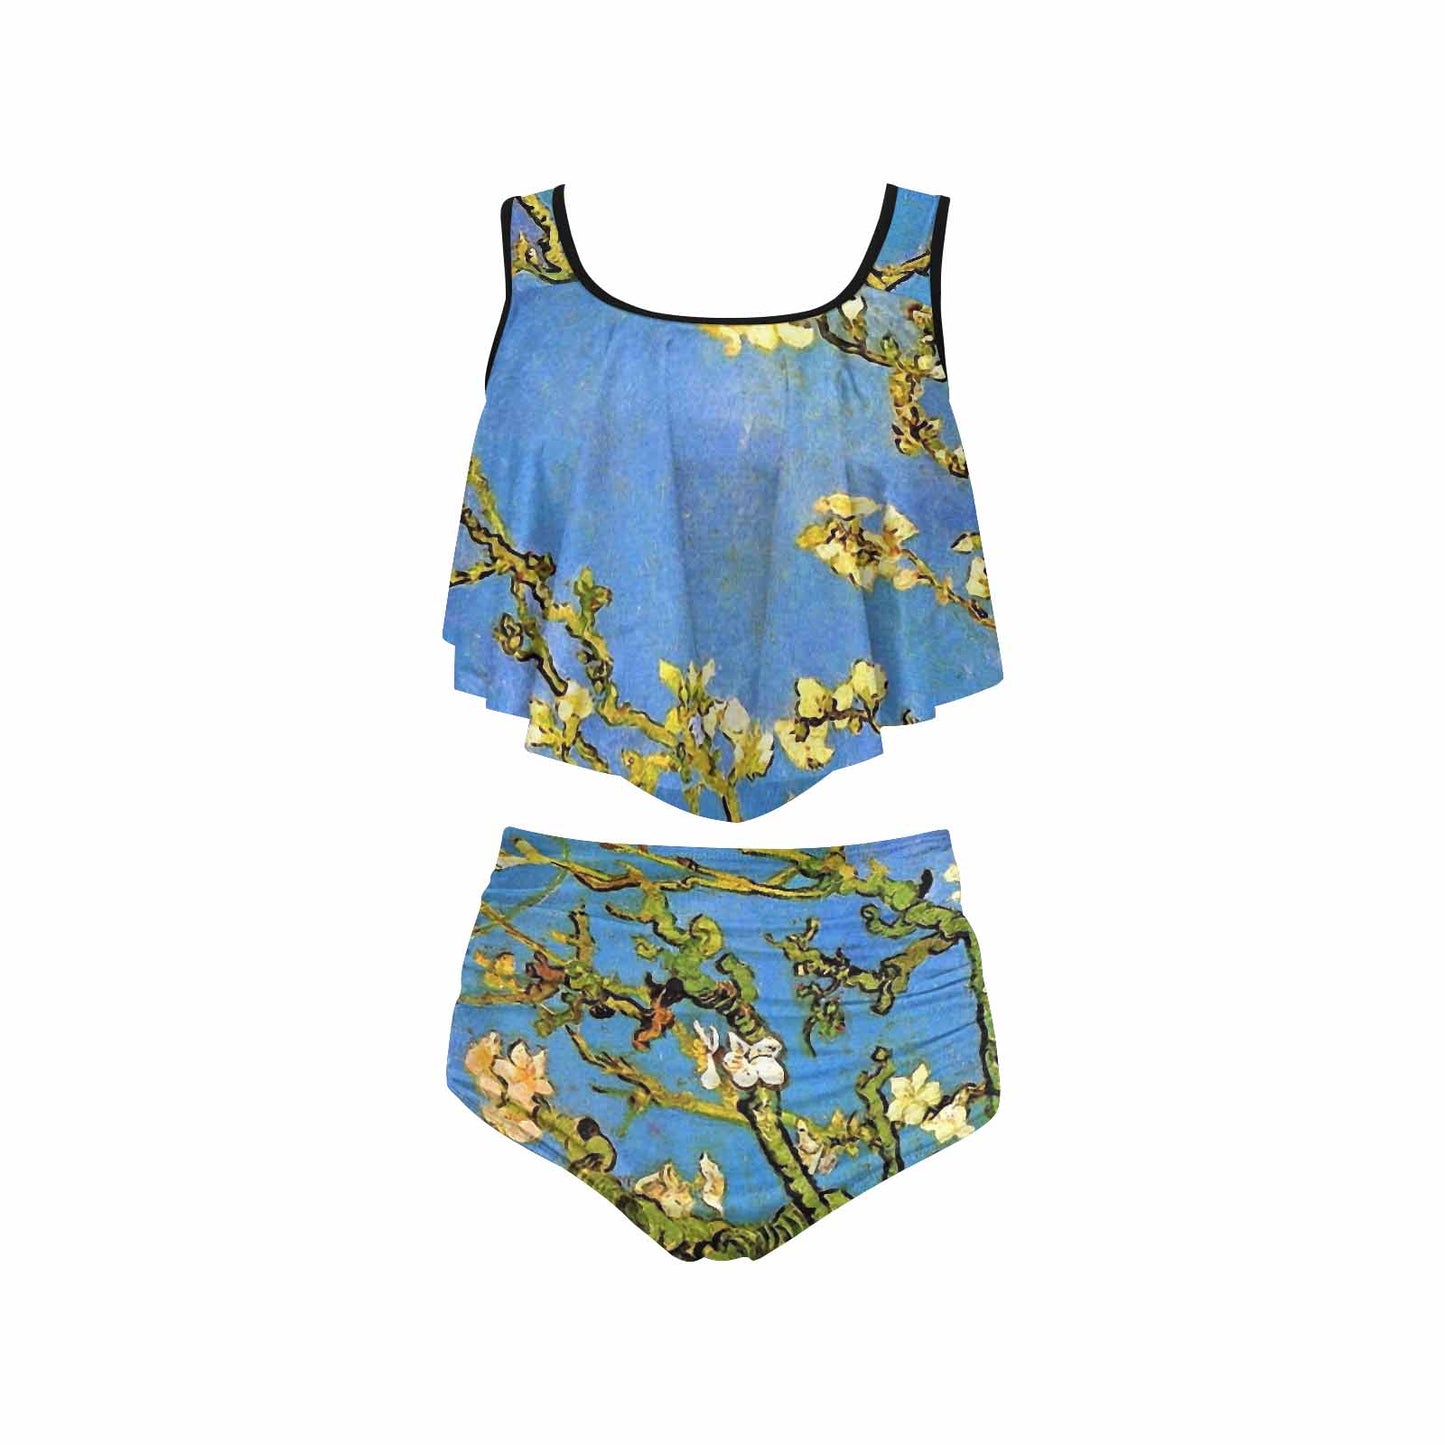 Vintage floral high waisted flounce top bikini, swim wear, Design 20